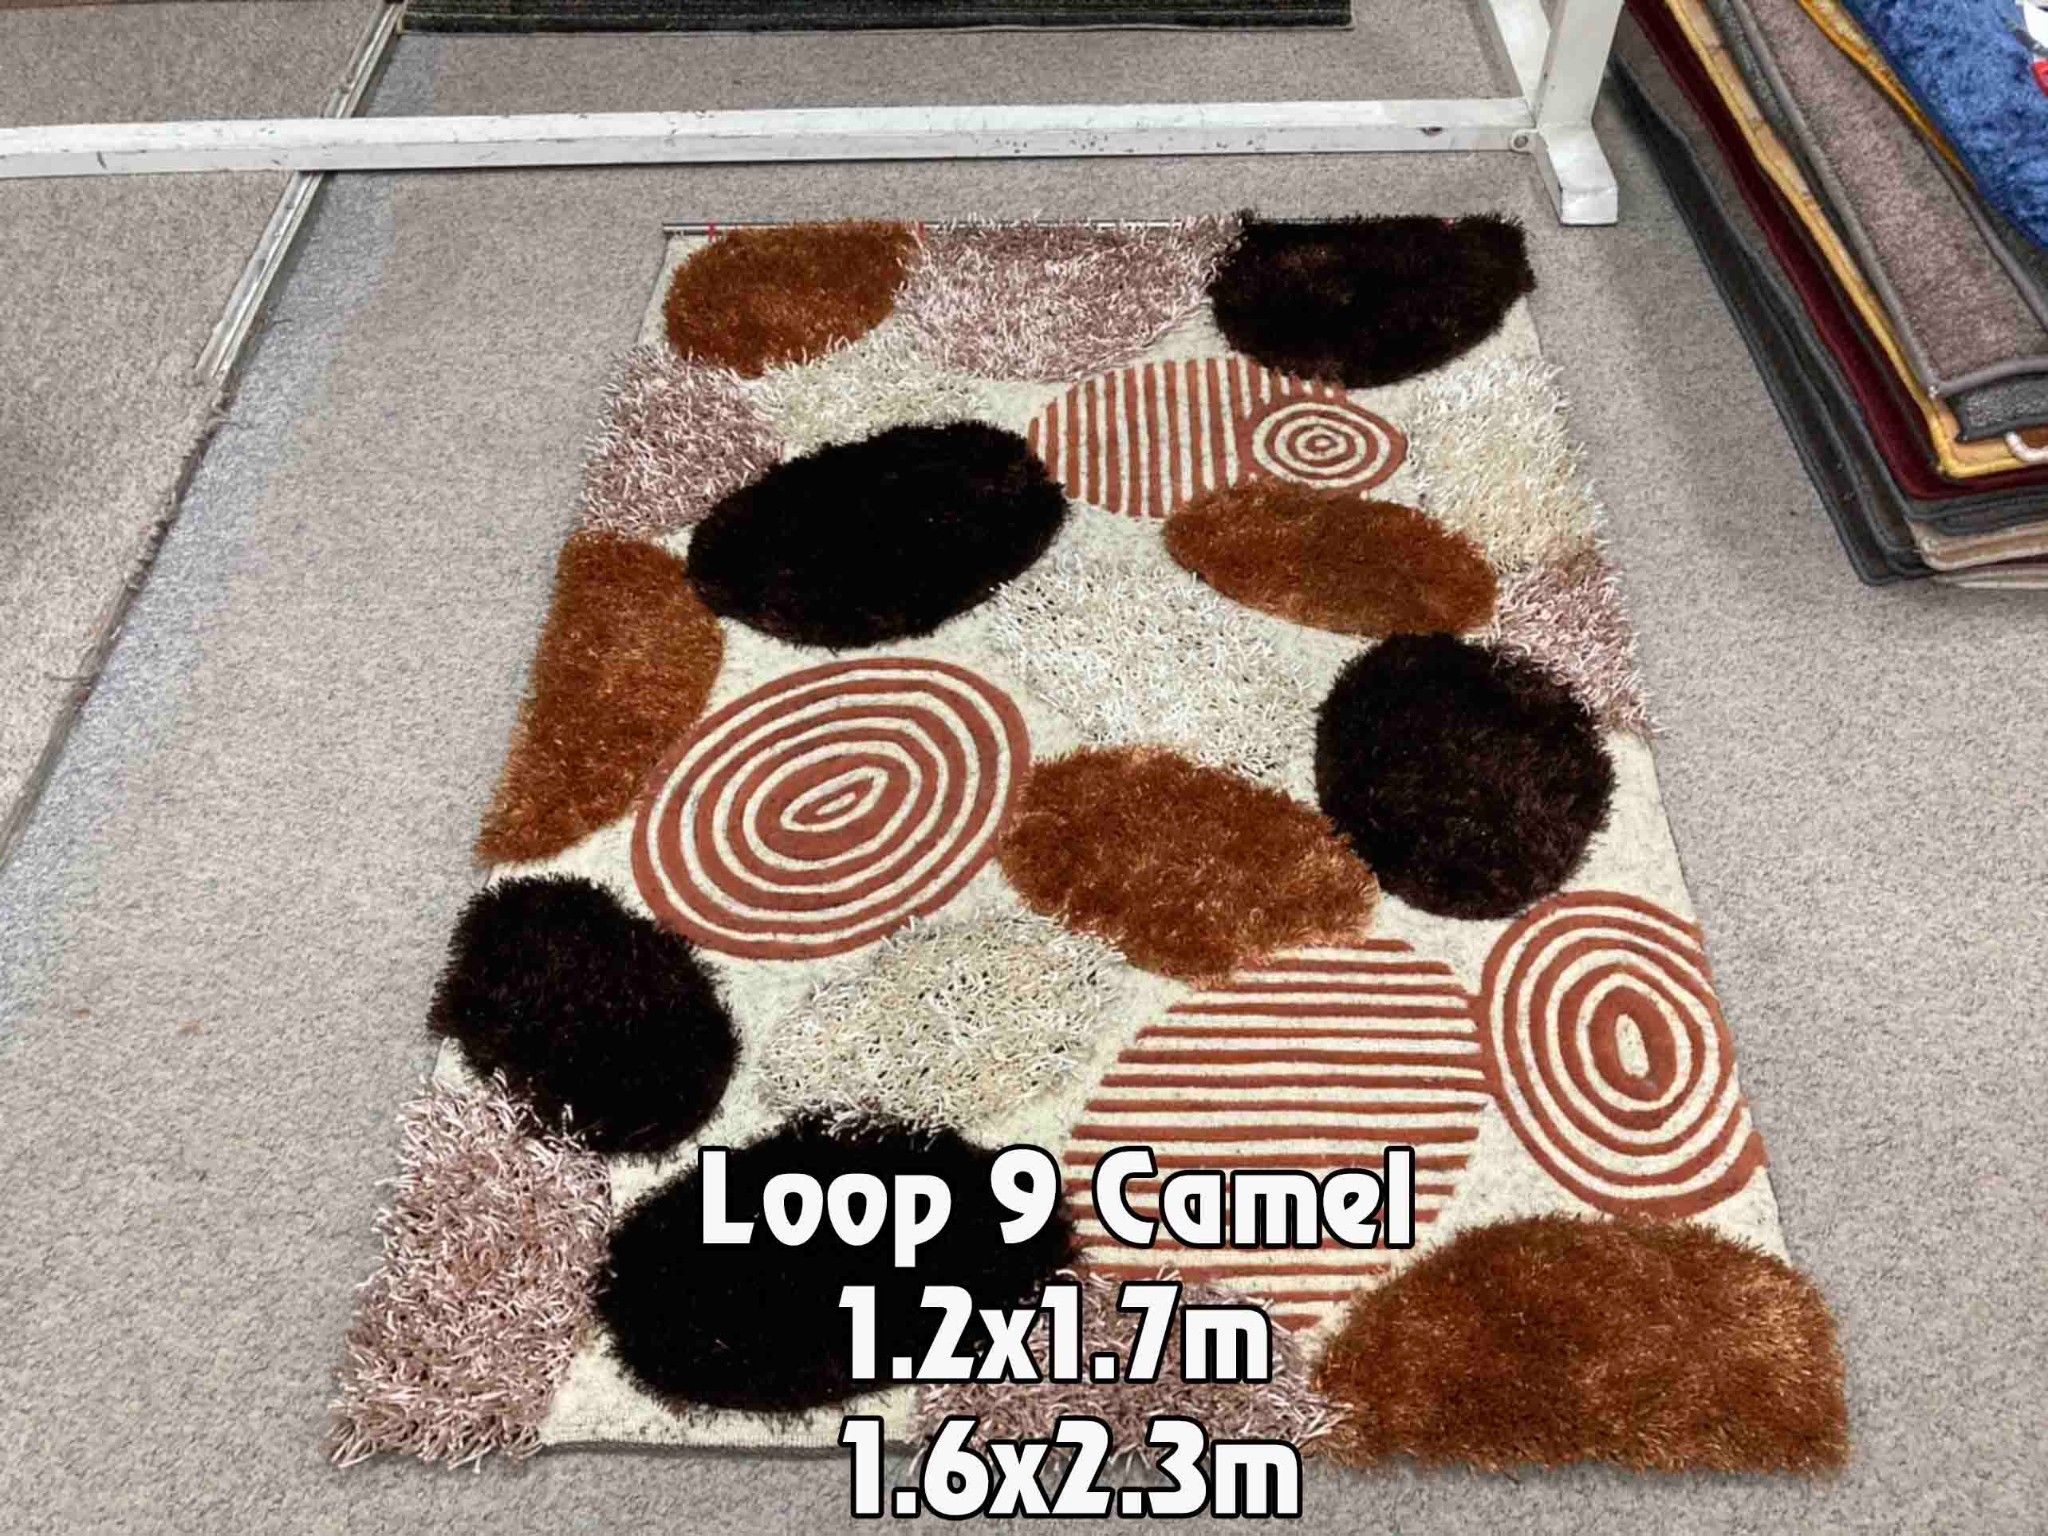  Thảm sofa giá rẻ Loop 9 Camel 